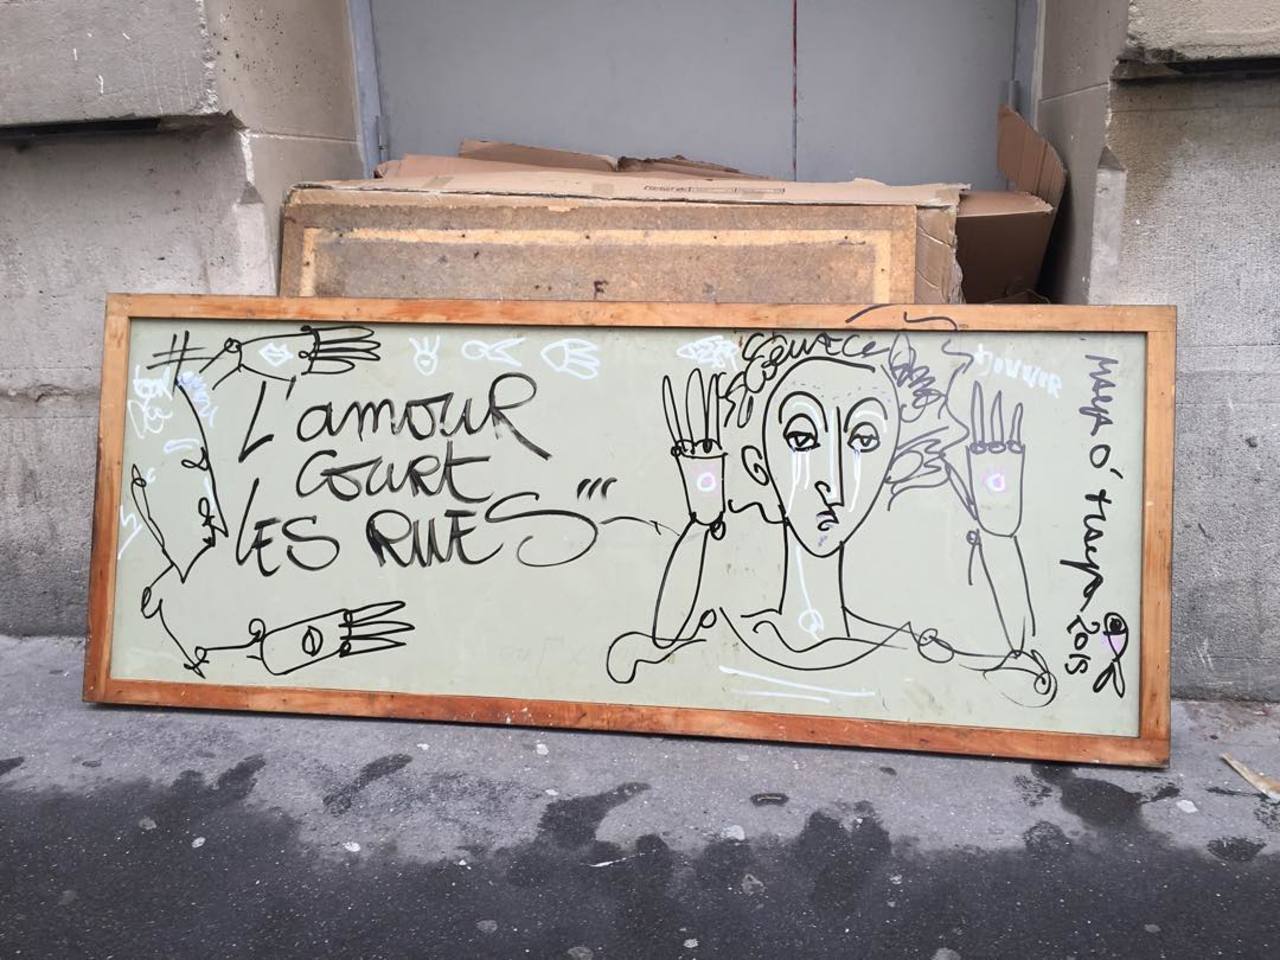 #Paris #graffiti photo by @maya.o.maya http://ift.tt/1jWFcYm #StreetArt https://t.co/PdsjTvRB61